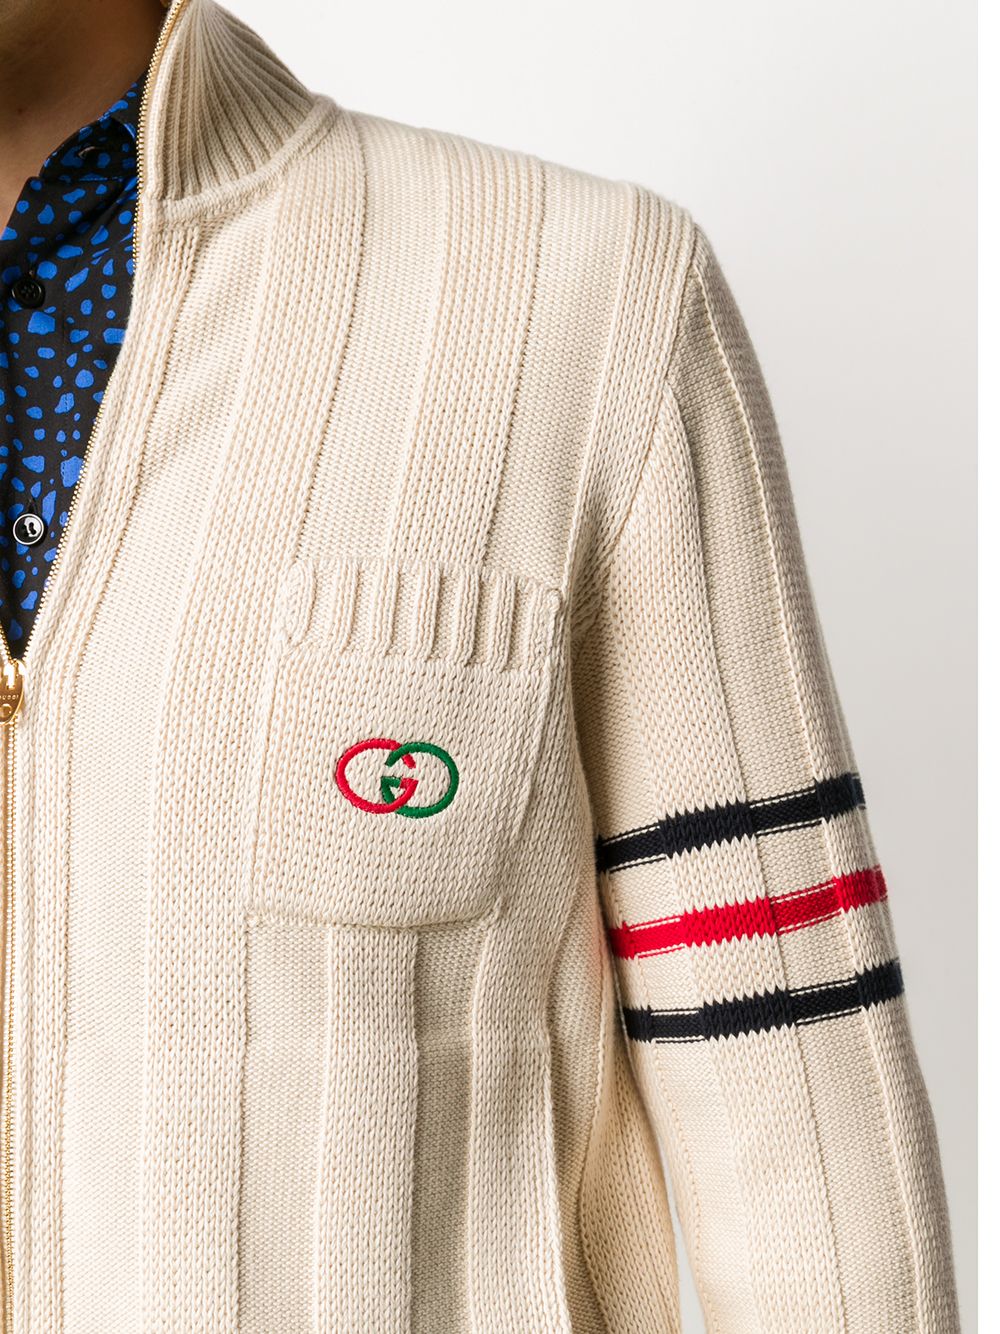 фото Gucci кардиган на молнии с логотипом interlocking g